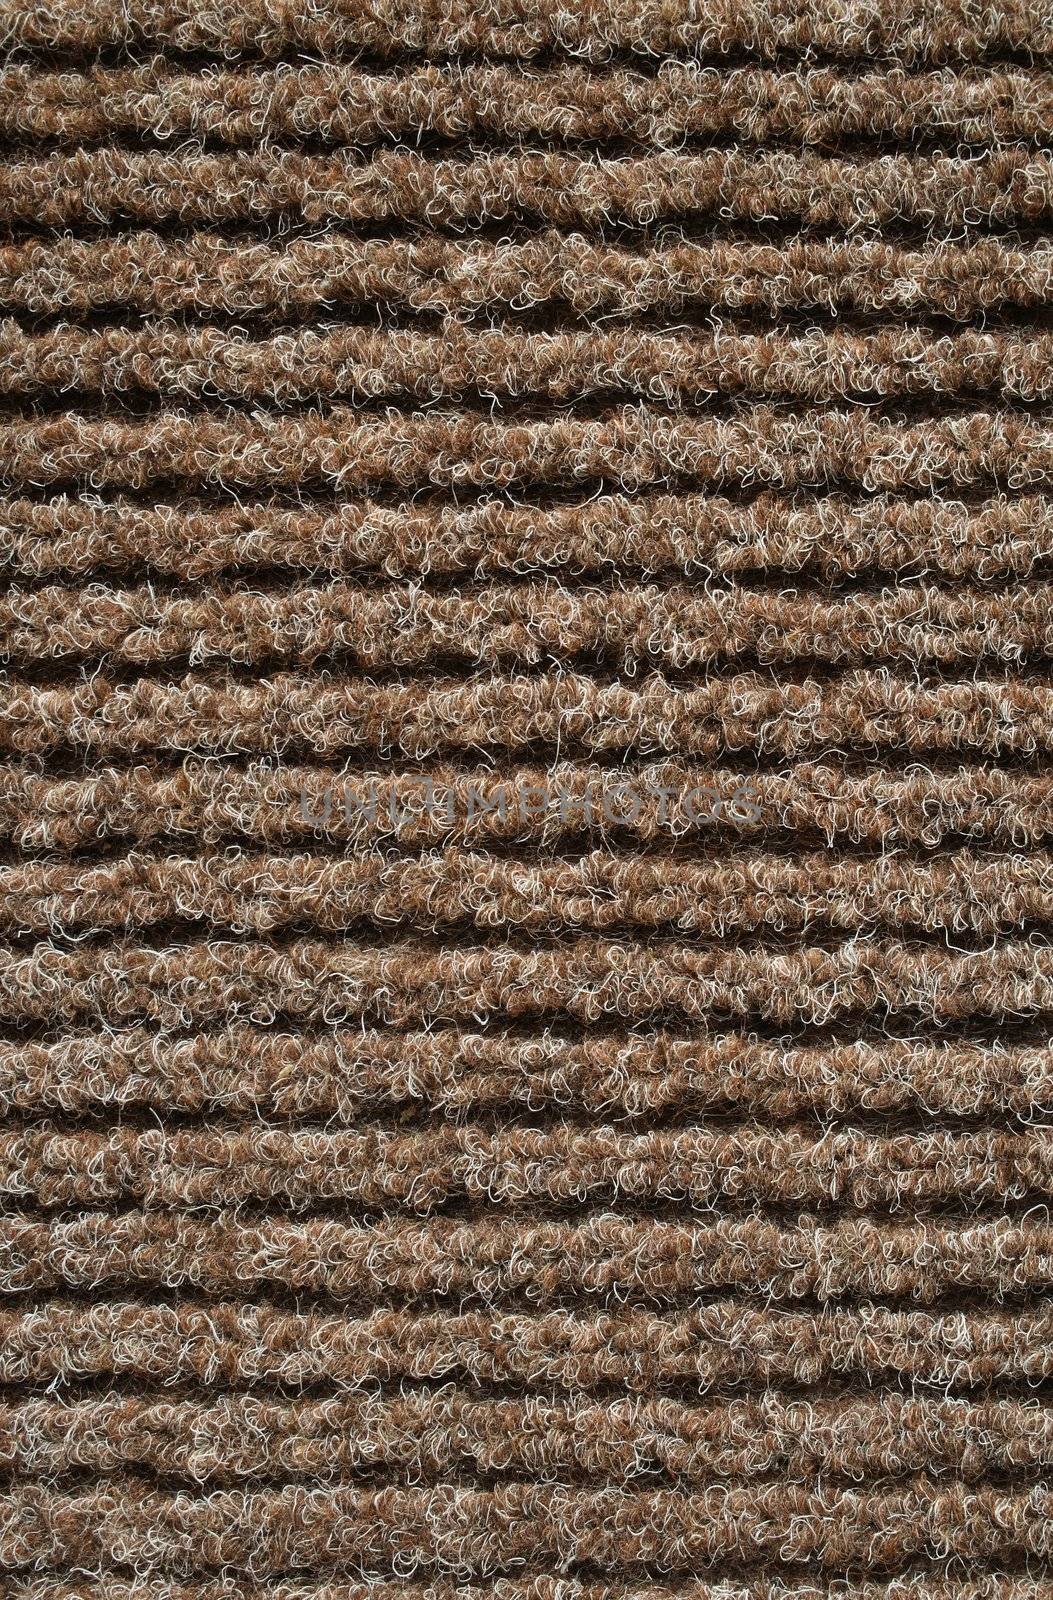 Striped pattern of a carpet by anikasalsera